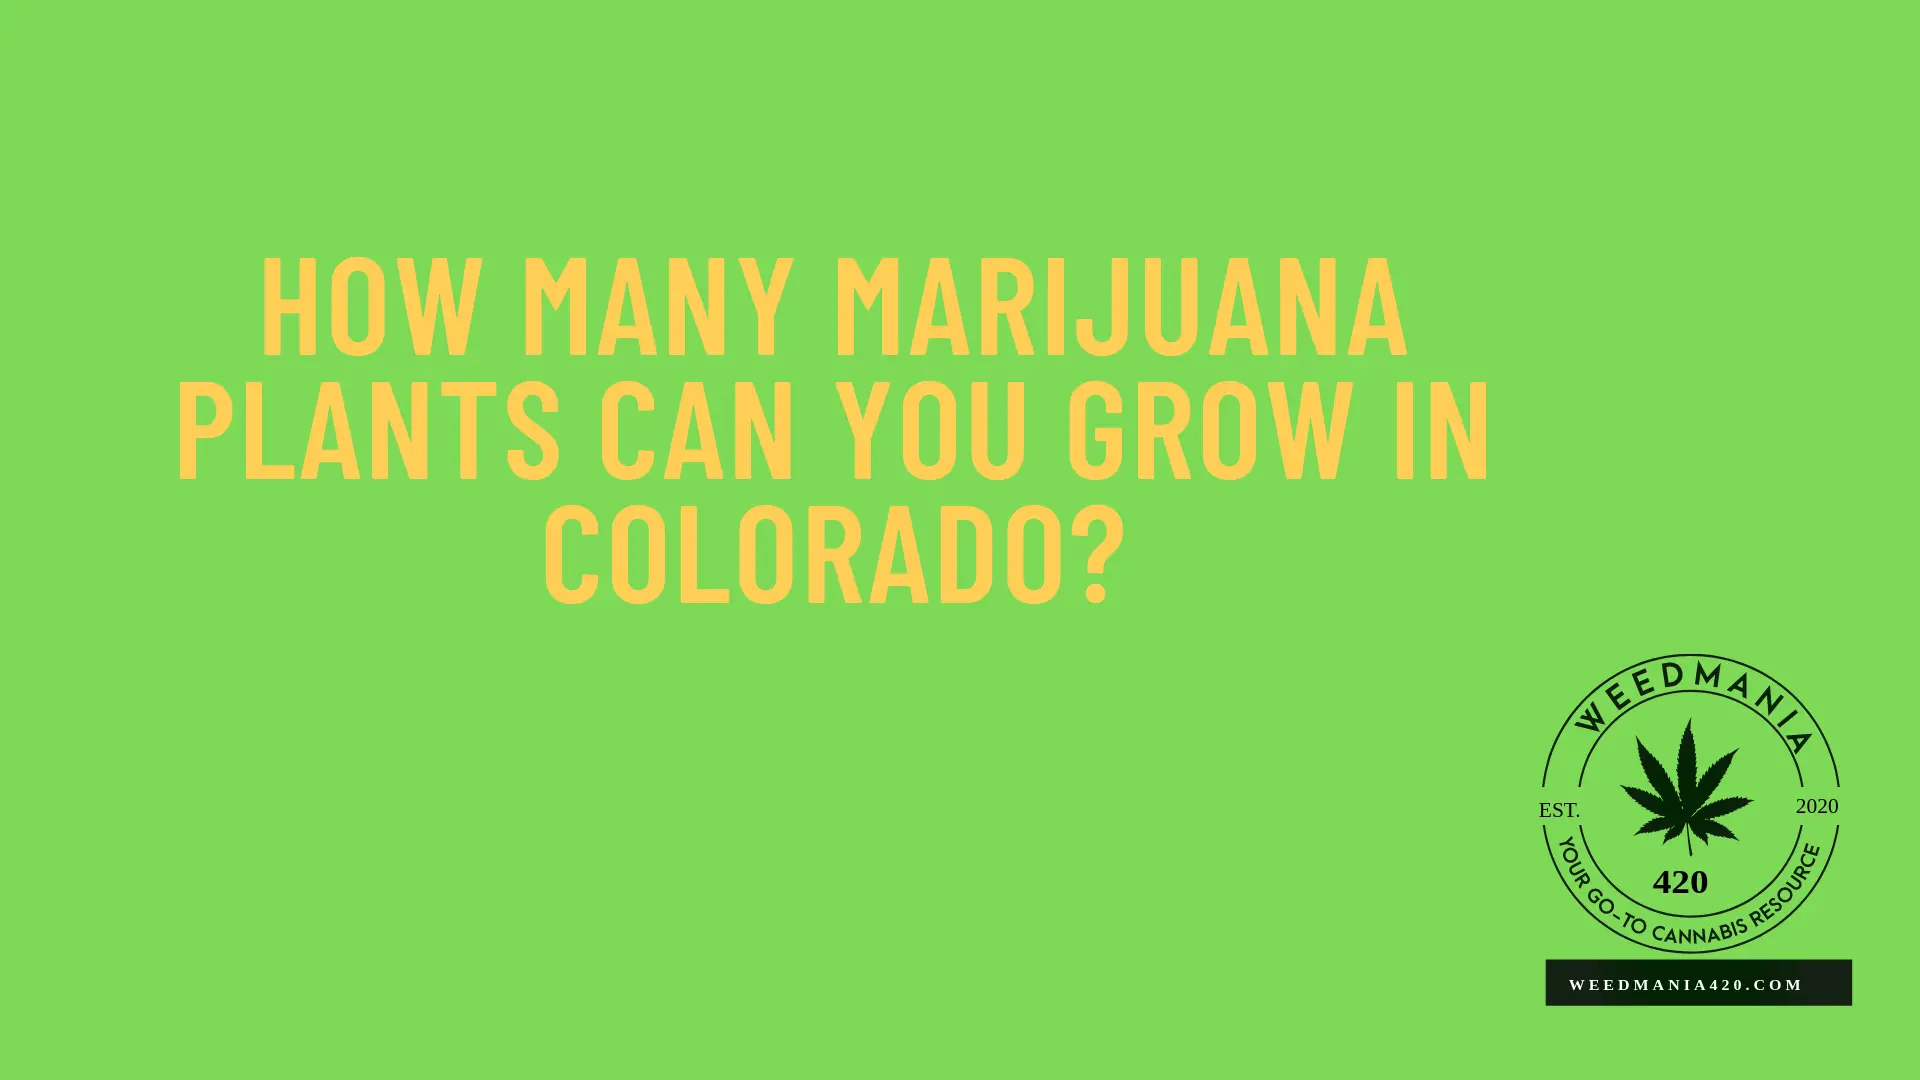 How Many Marijuana Plants Can You Grow in Colorado?